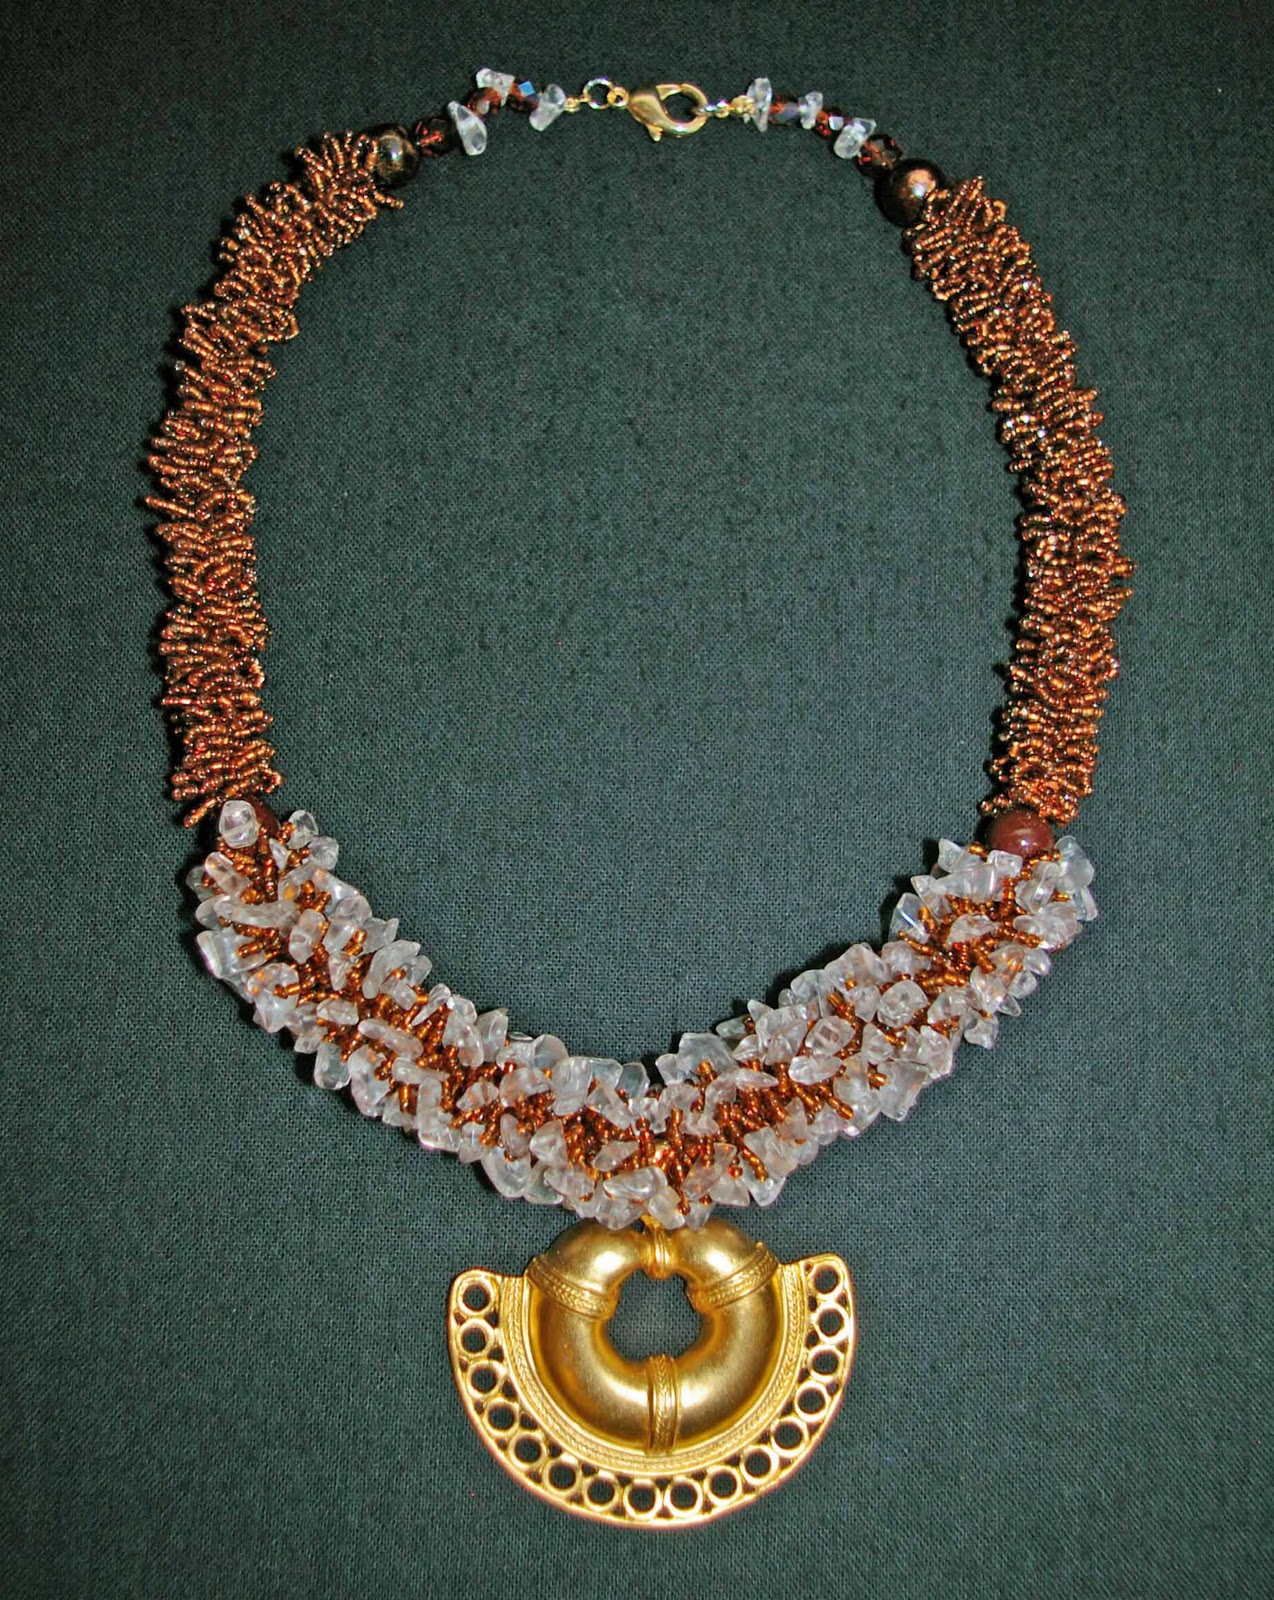 Precolumbian jewelry: December 2010